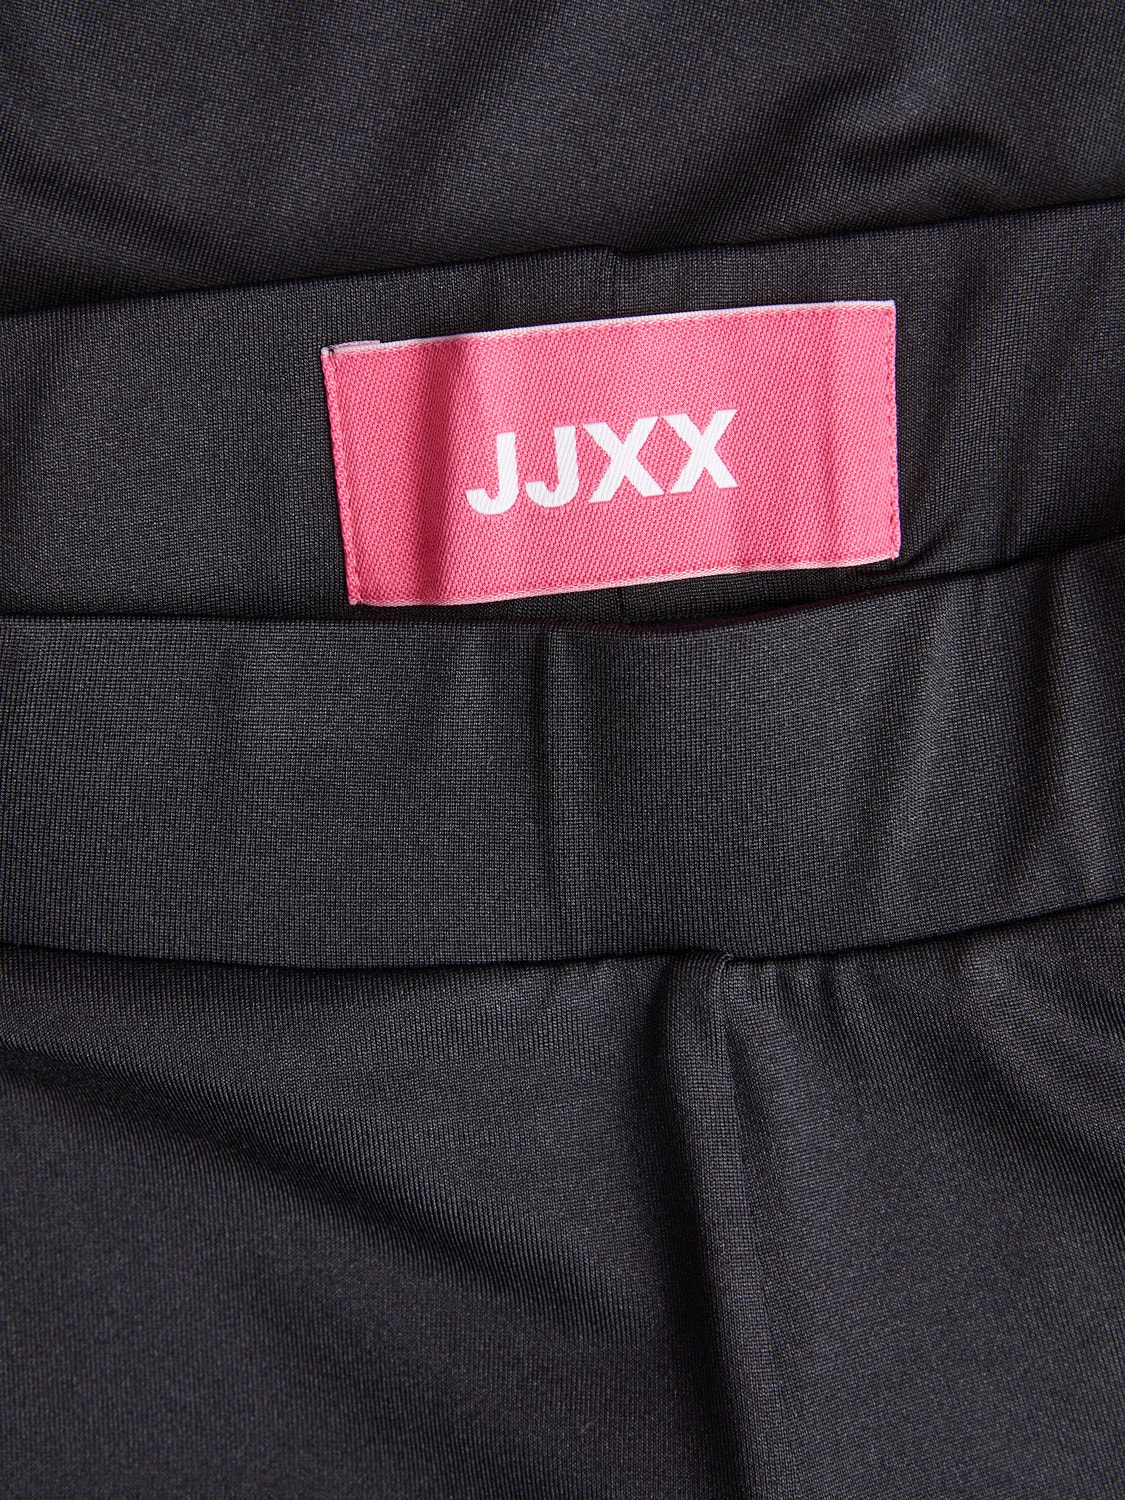 JJXX JXSILLE Legging -Black - 12248646